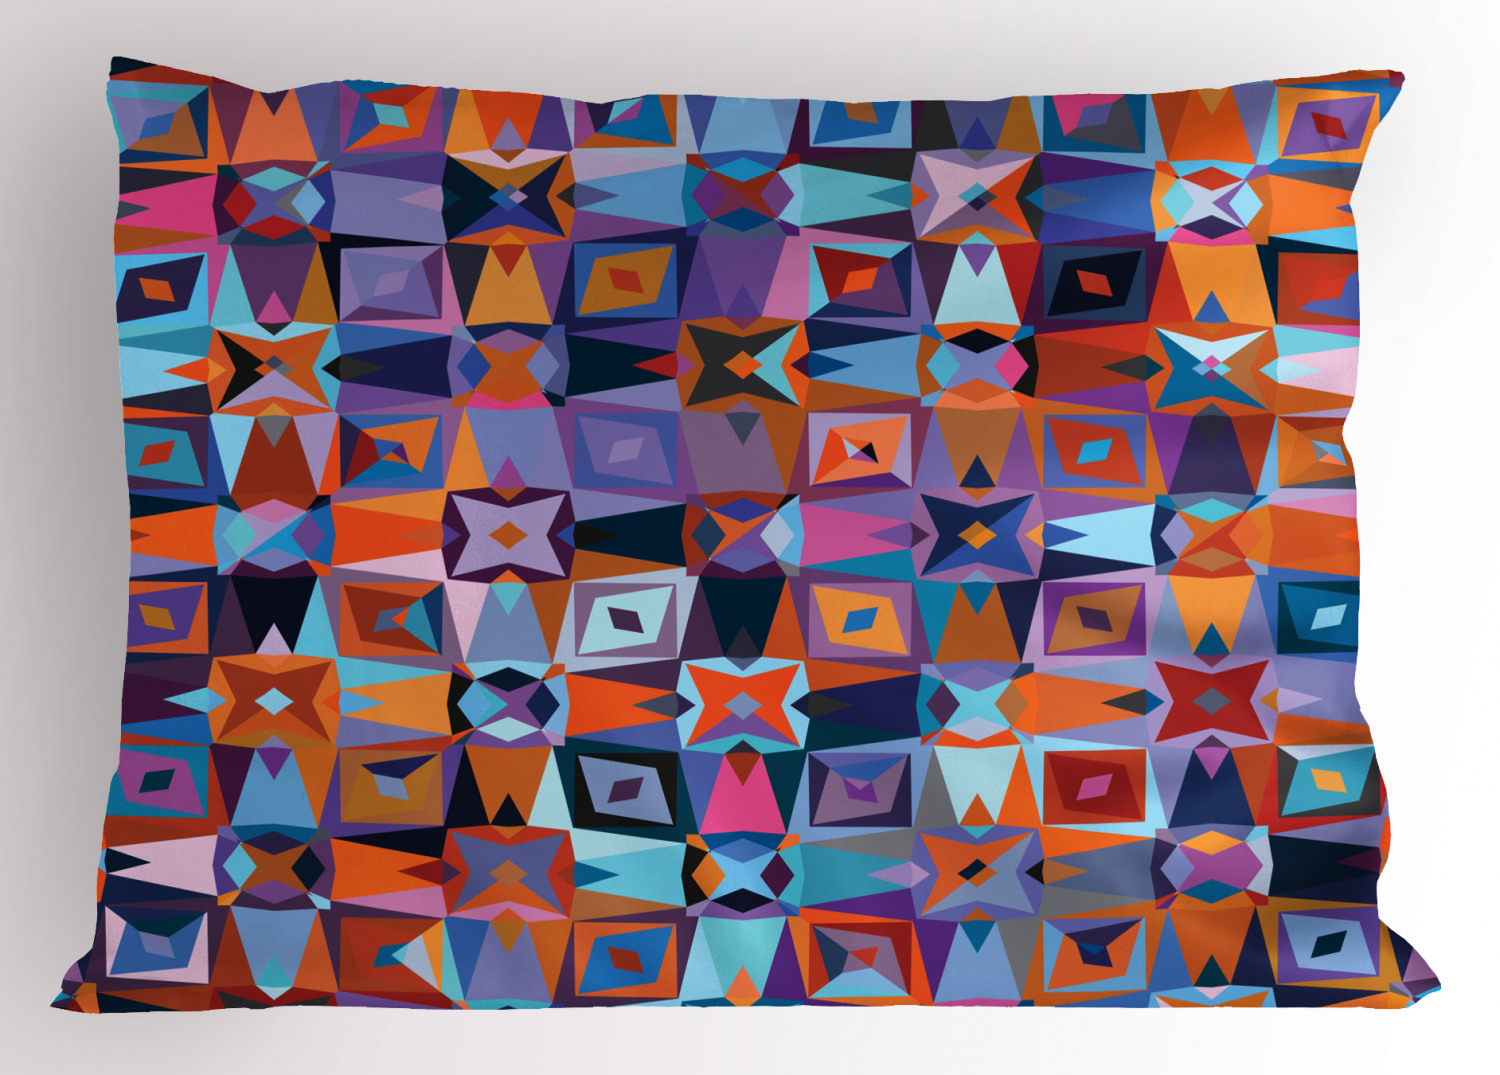 Details about   Abstract Composition Pillow Sham Decorative Pillowcase 3 Sizes Bedroom Decor 